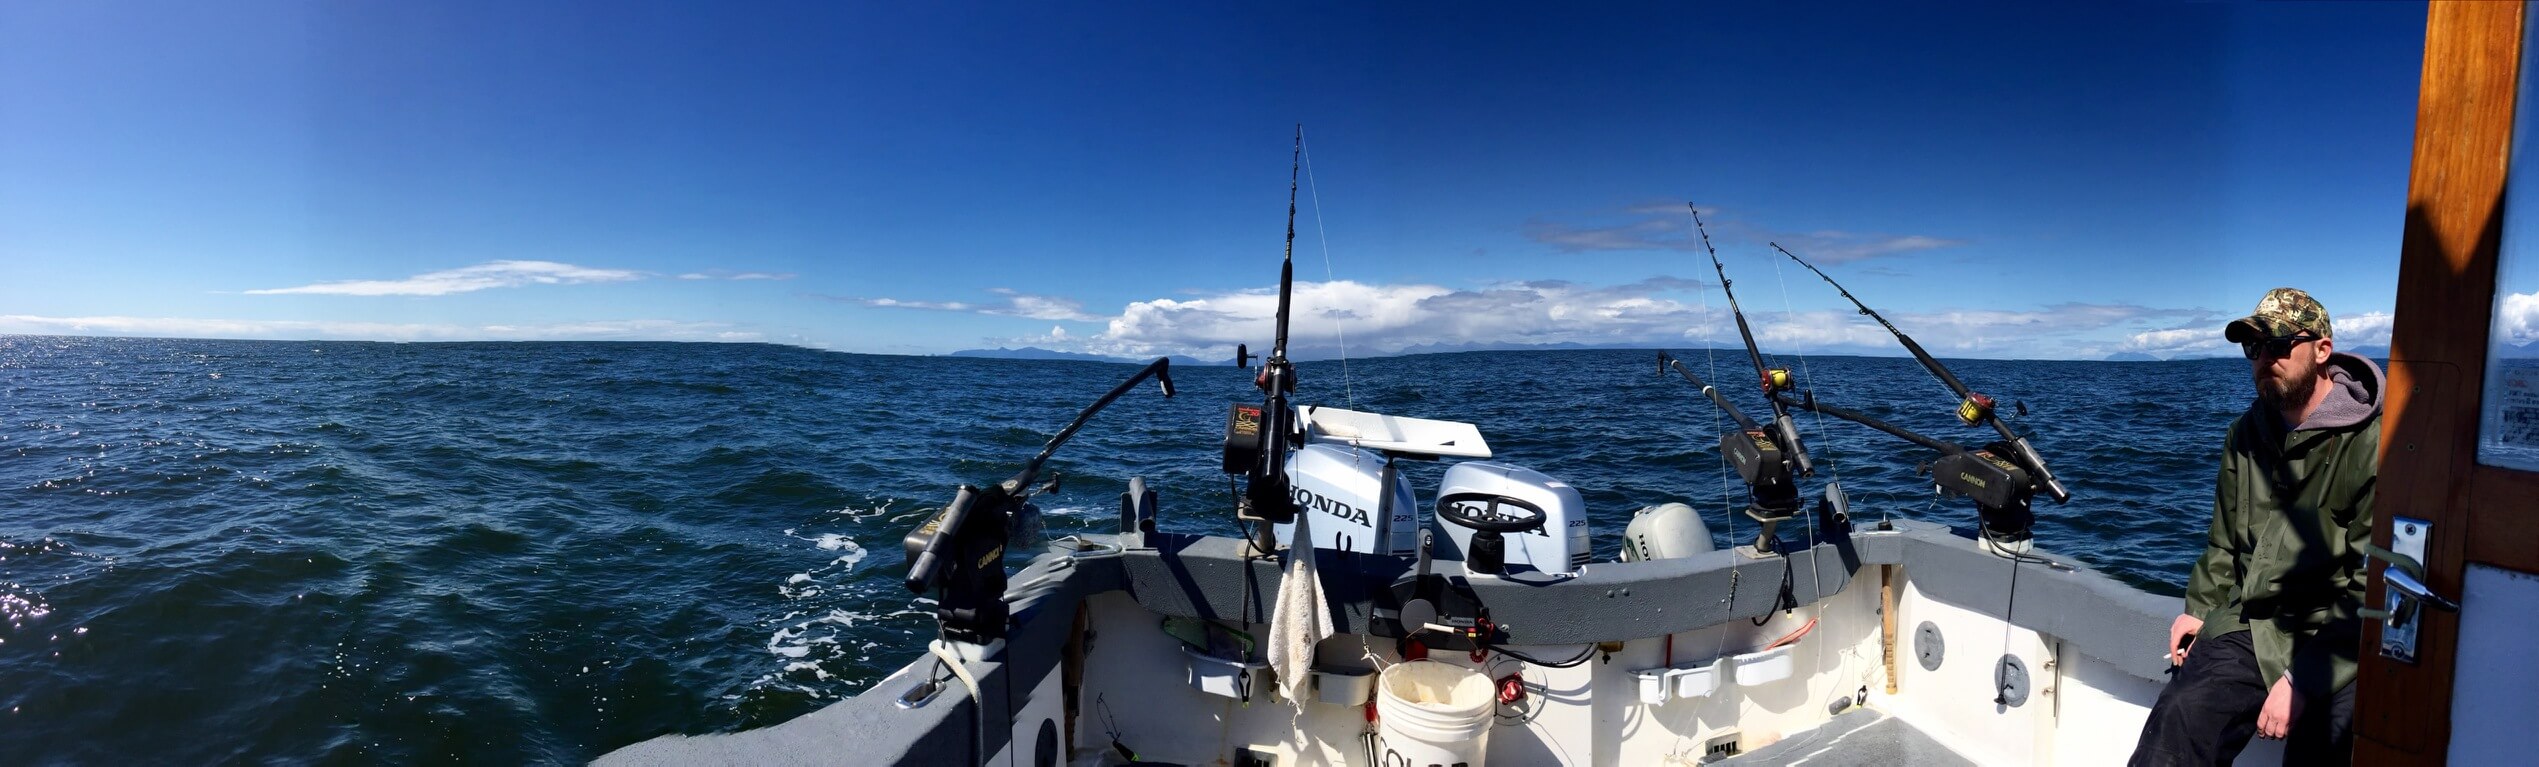 Ketchikan Fishing Charters & Tours | Anglers Adventures Alaska